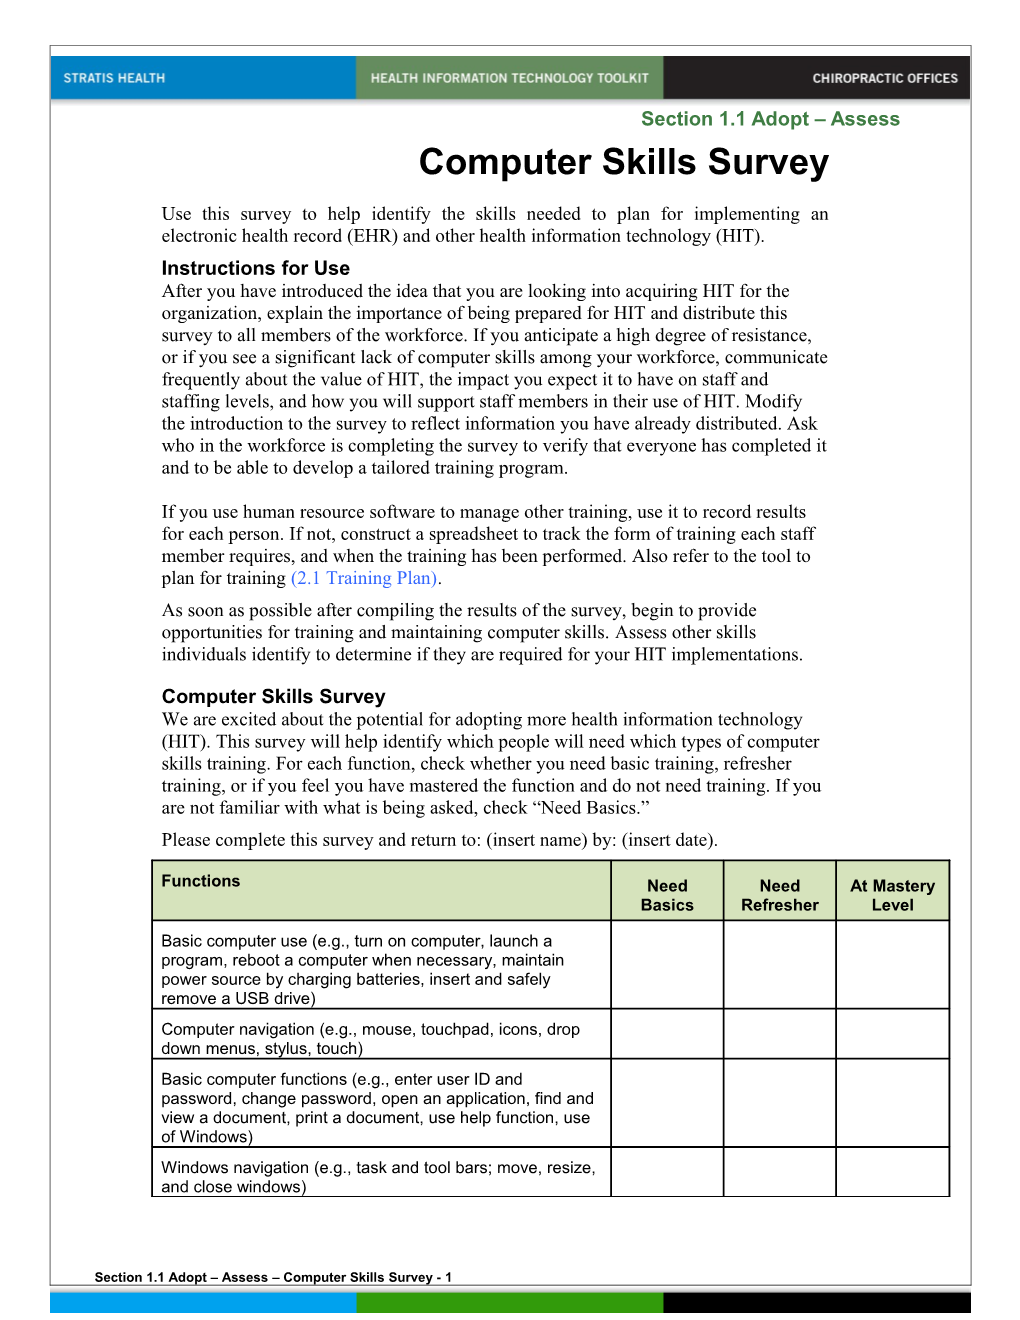 1.1 Computer Skills Survey